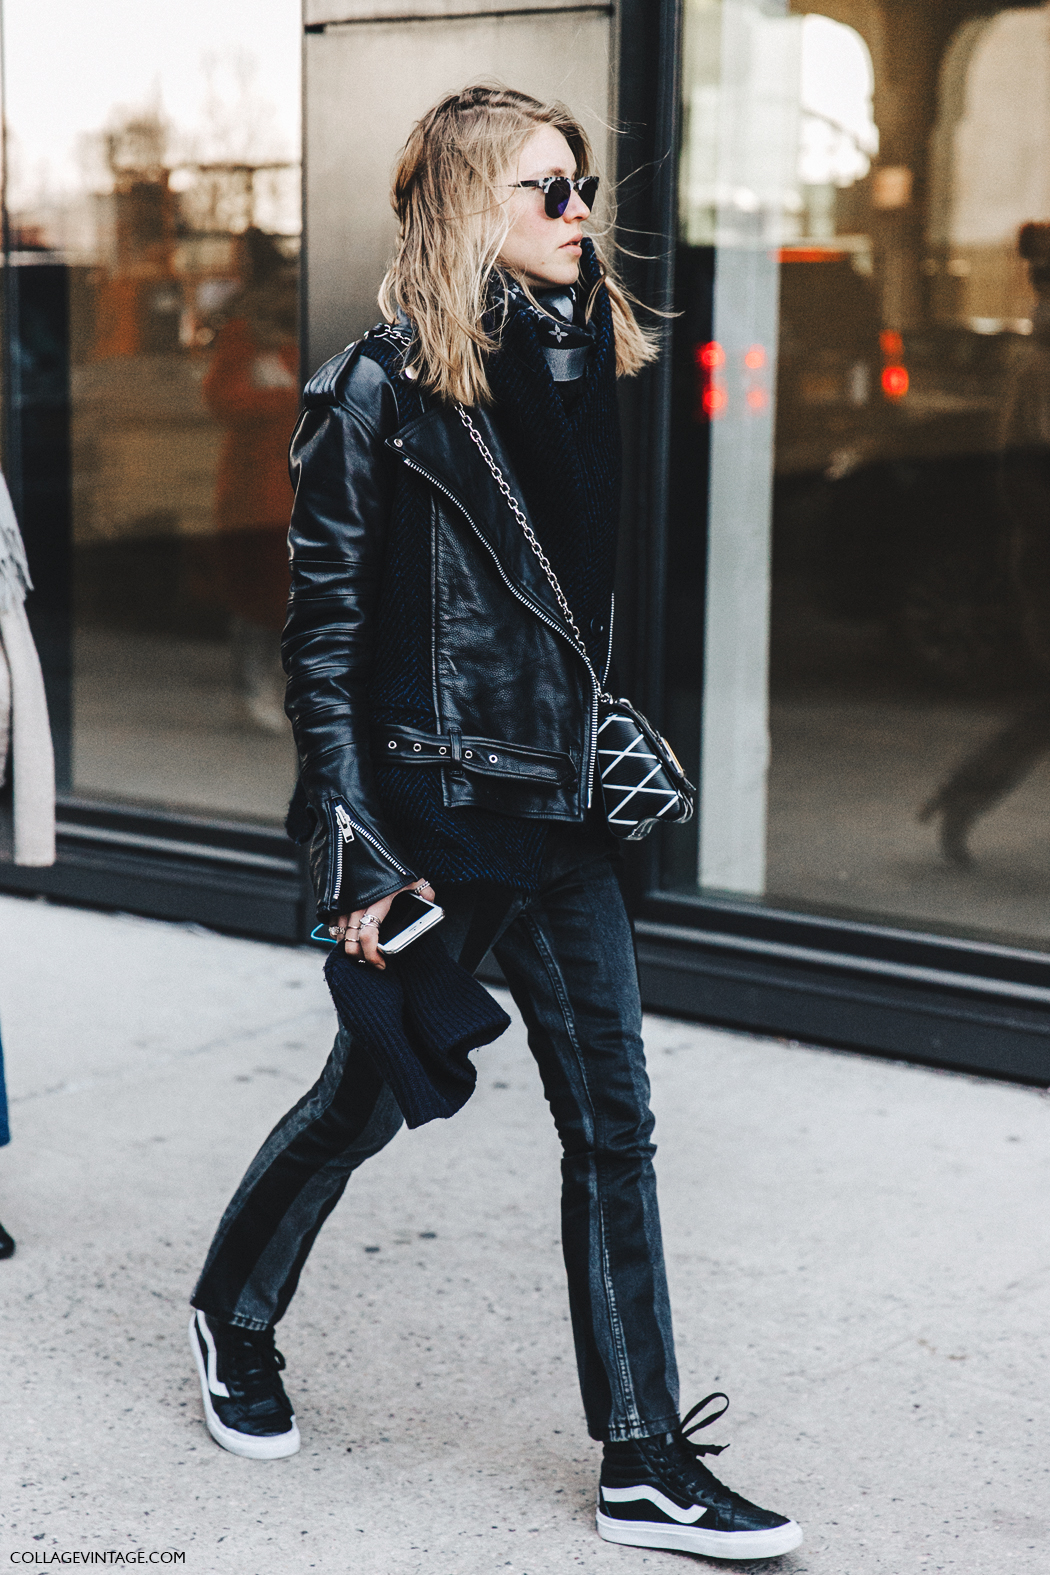 NYFW-New_York_Fashion_Week-Fall_Winter-17-Street_Style-Jessica_Minkoff-Jeans-Black-Leather_Jacket-Vans-